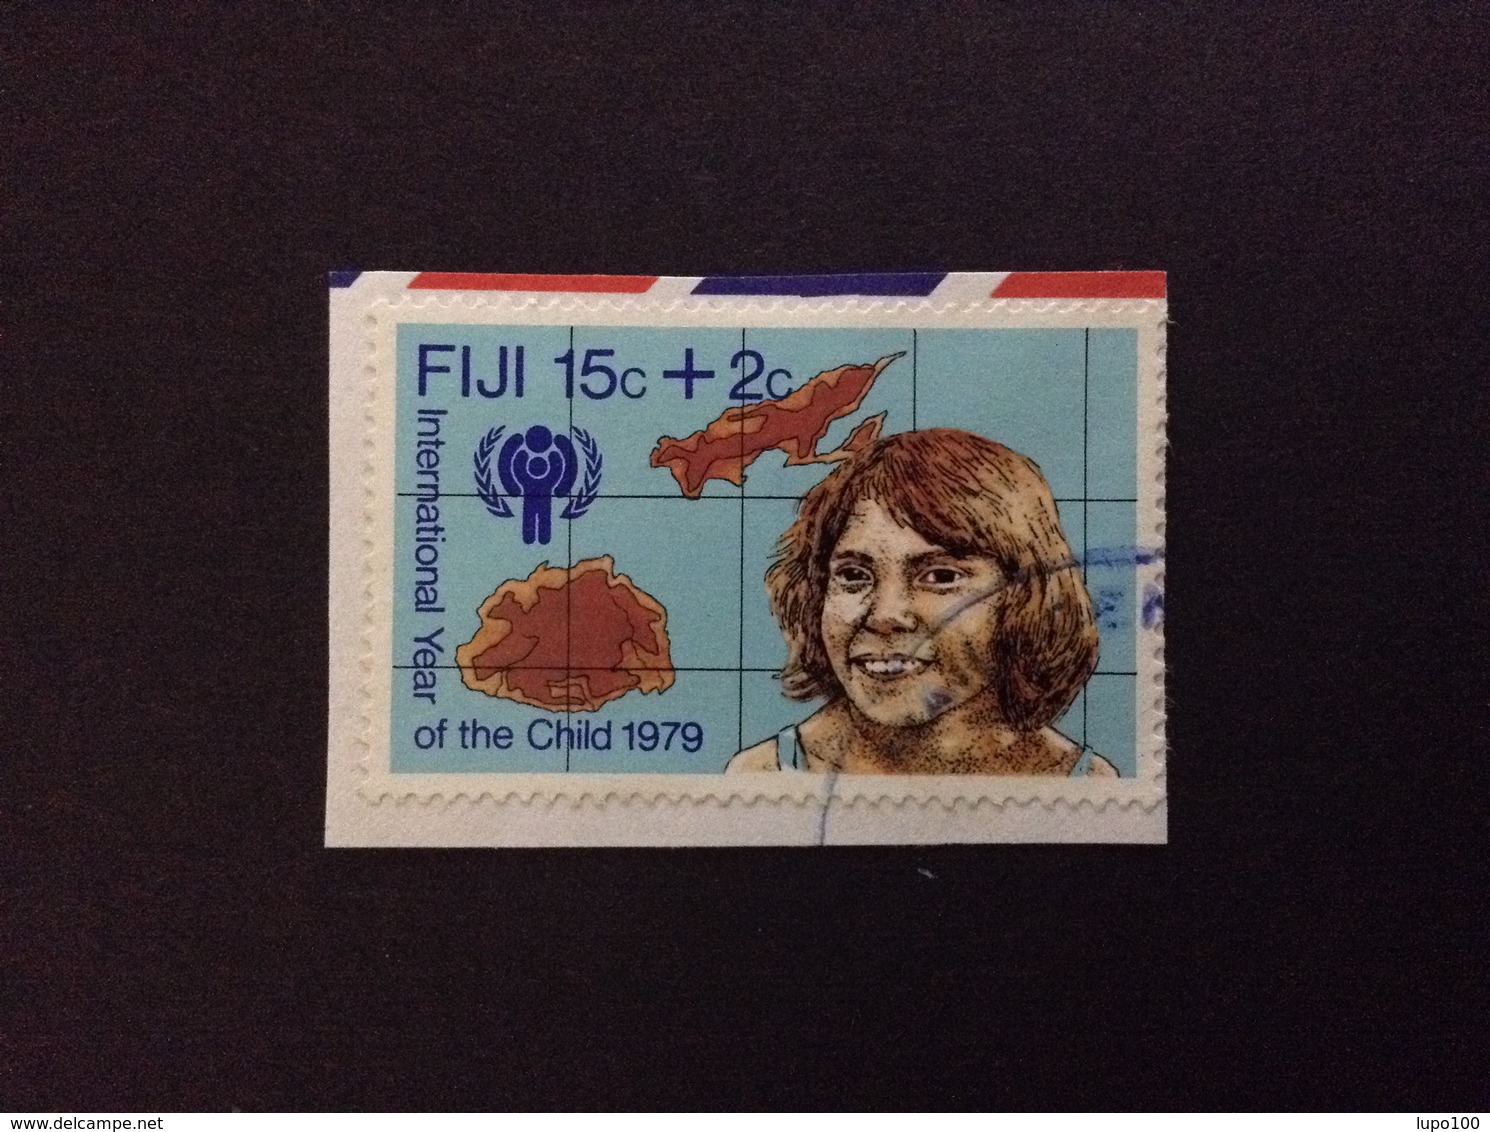 1979 FIJI INTERNATIONAL YEAR OF THE CHILD 15 C + 2 C FRANCOBOLLO USATO STAMP USED - Fidji (1970-...)